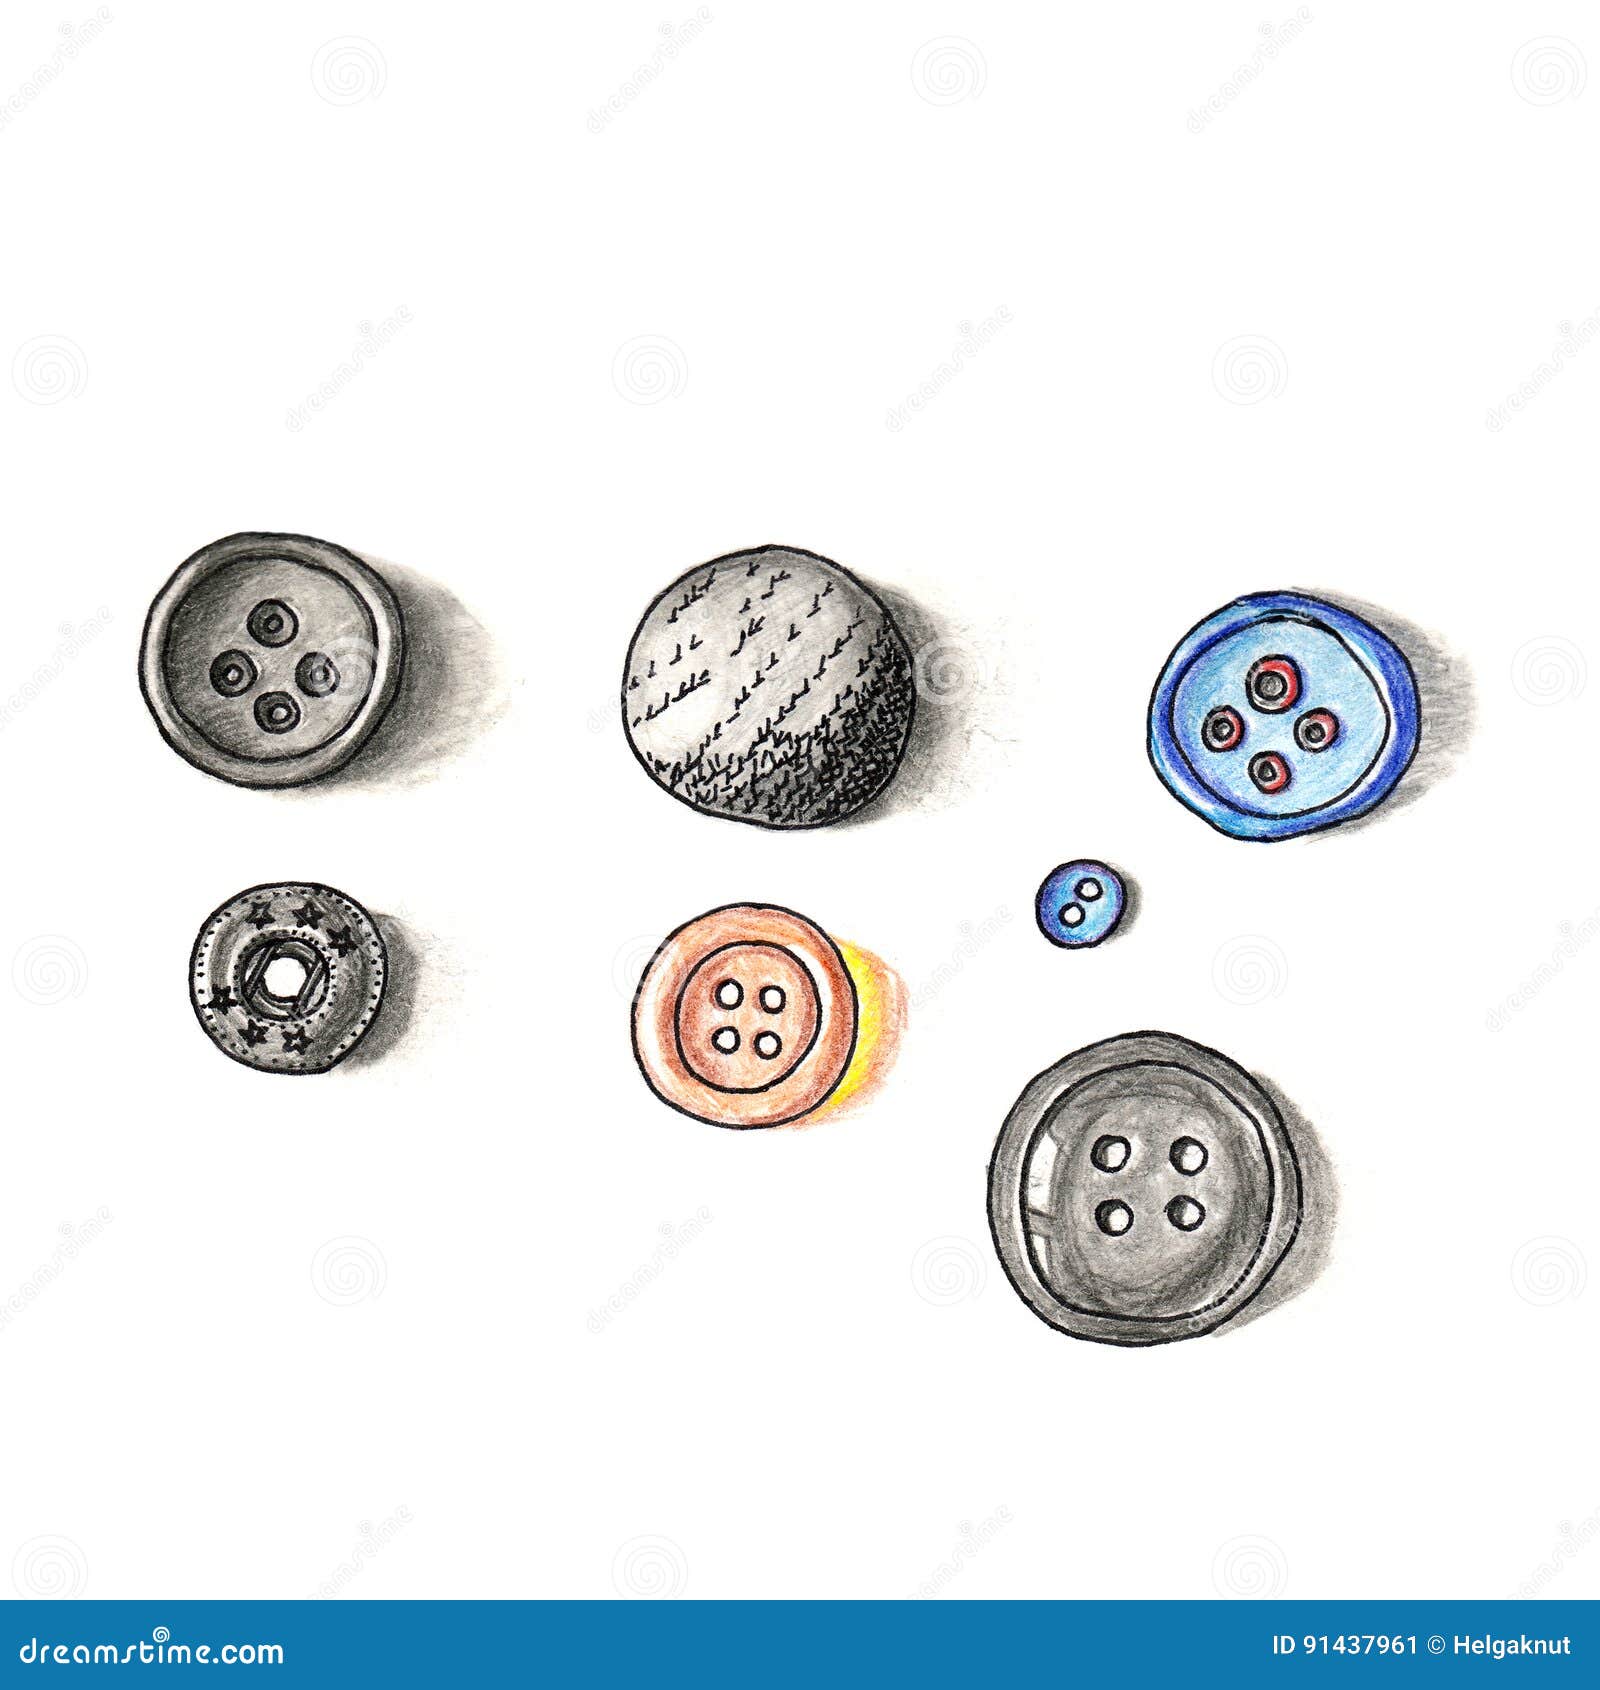 CC Metal Products 5213 Sketch Metal Button Size 24 Ligne Antique Nickel  72Pack  Amazonin Industrial  Scientific